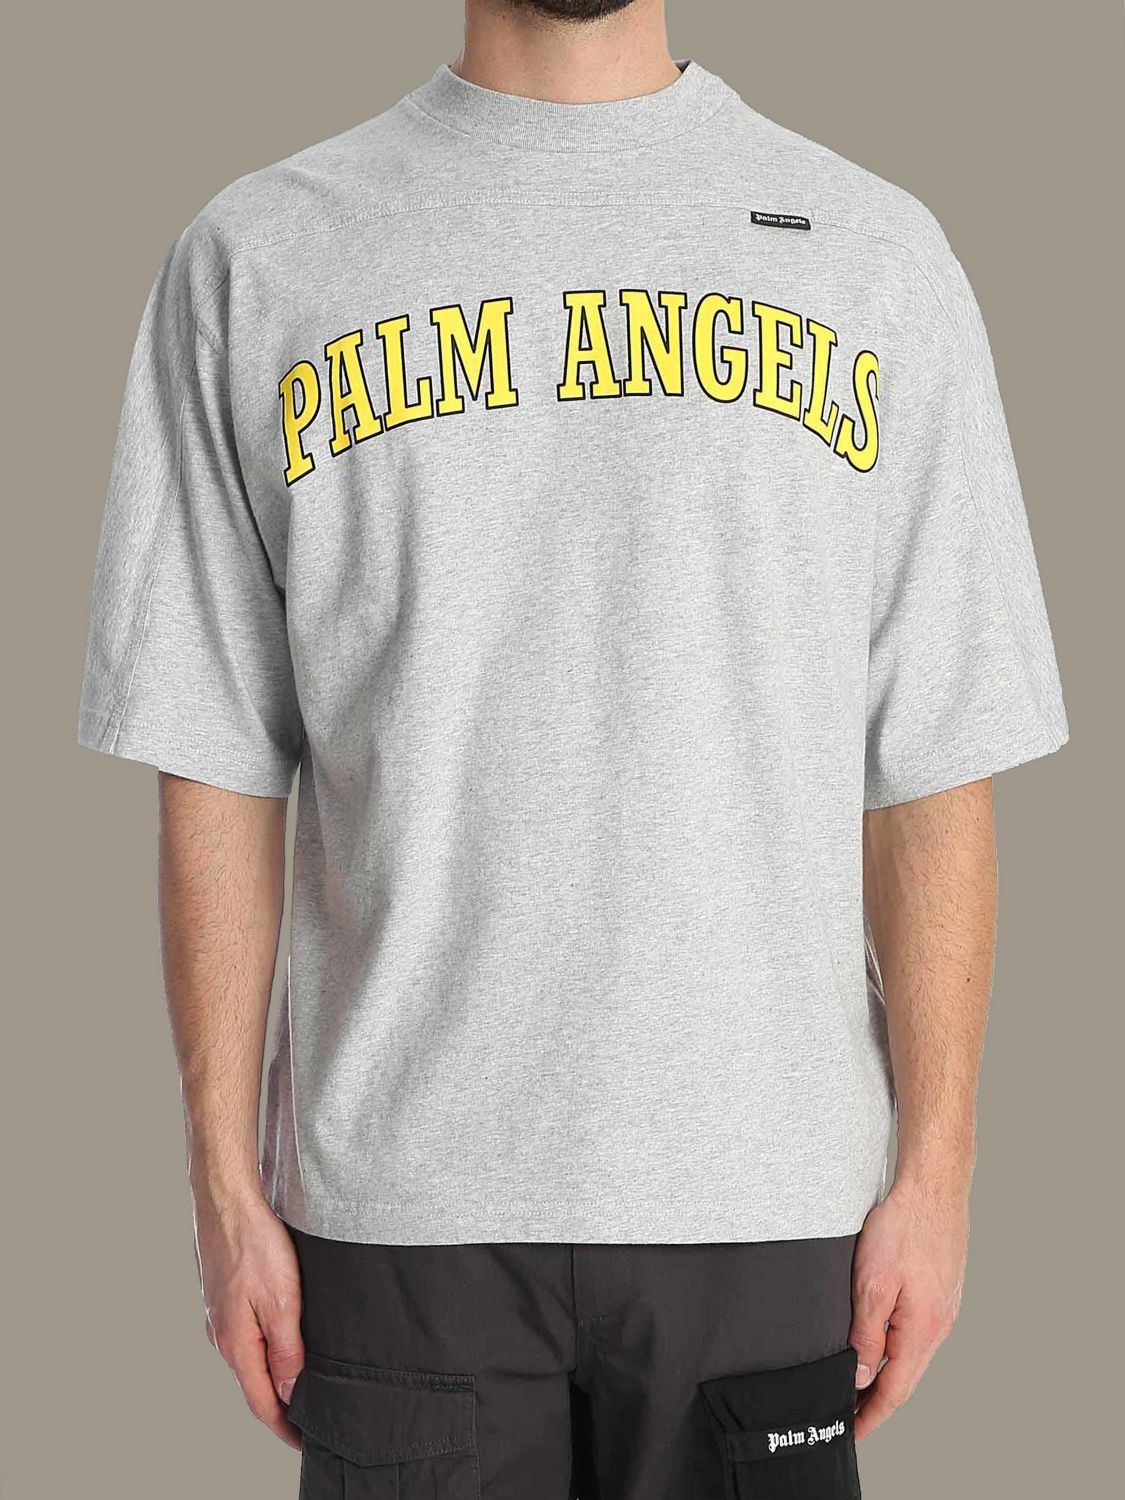 palm angels t shirt grey